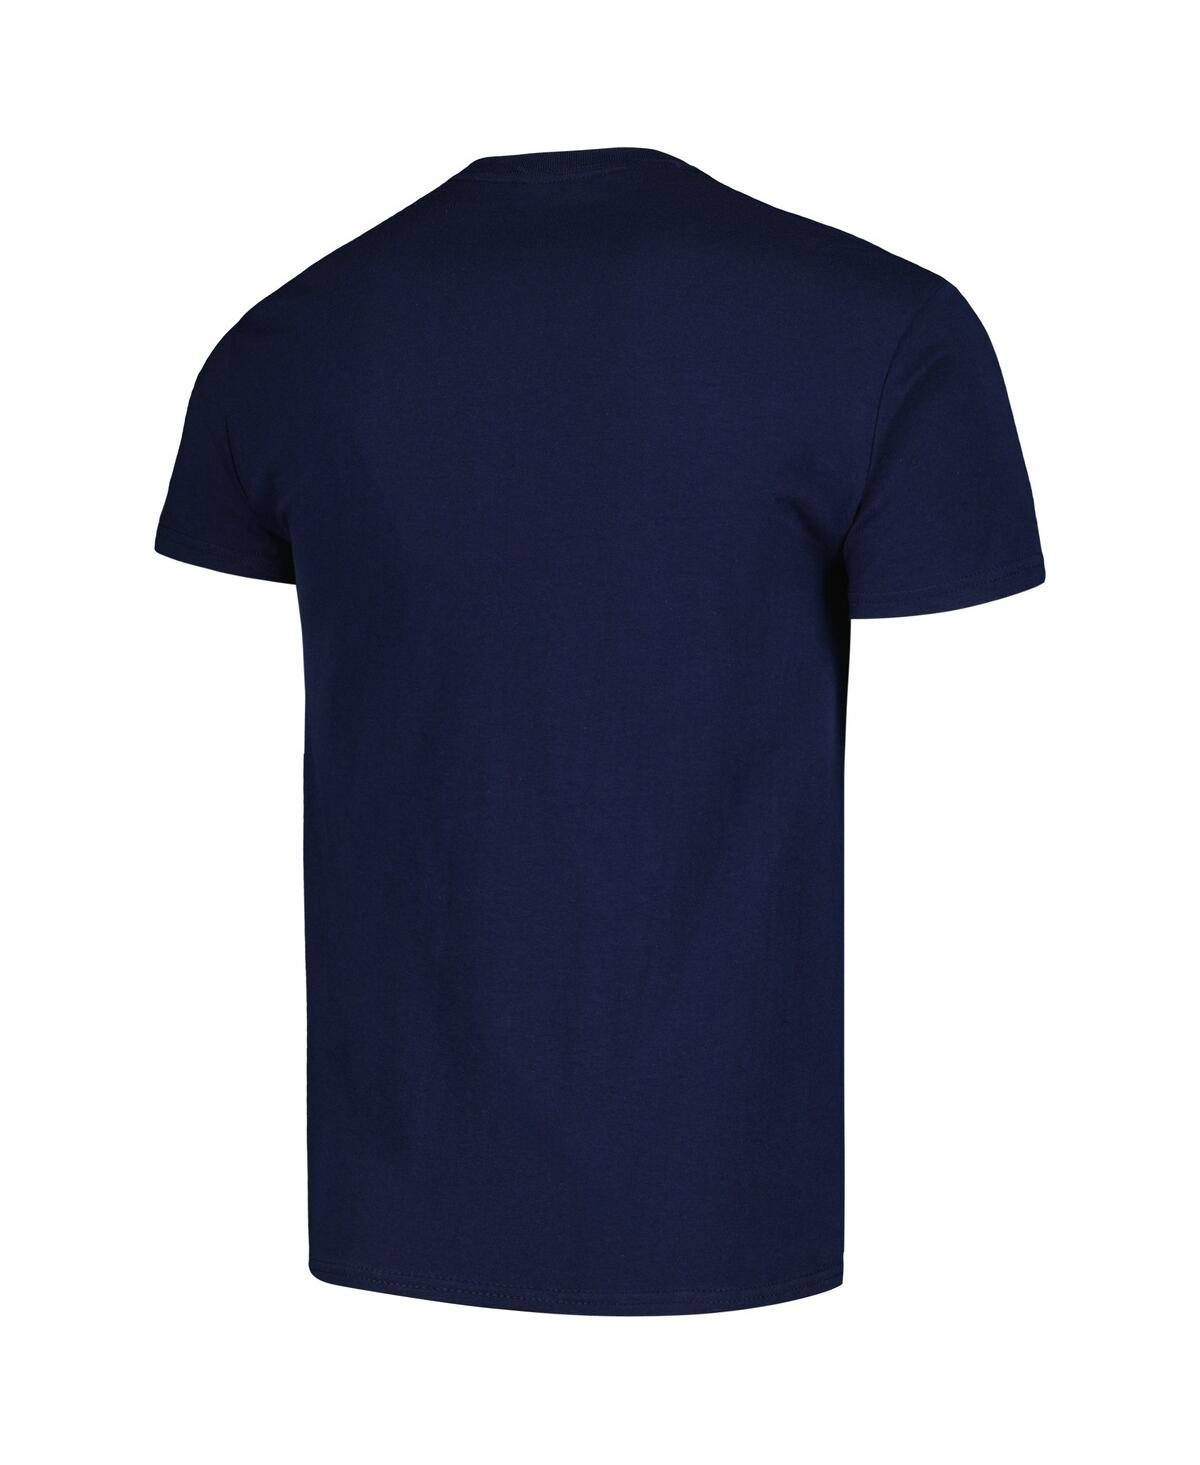 Shop Manhead Merch Men's  Navy Toto Self Titled Sword Graphic T-shirt